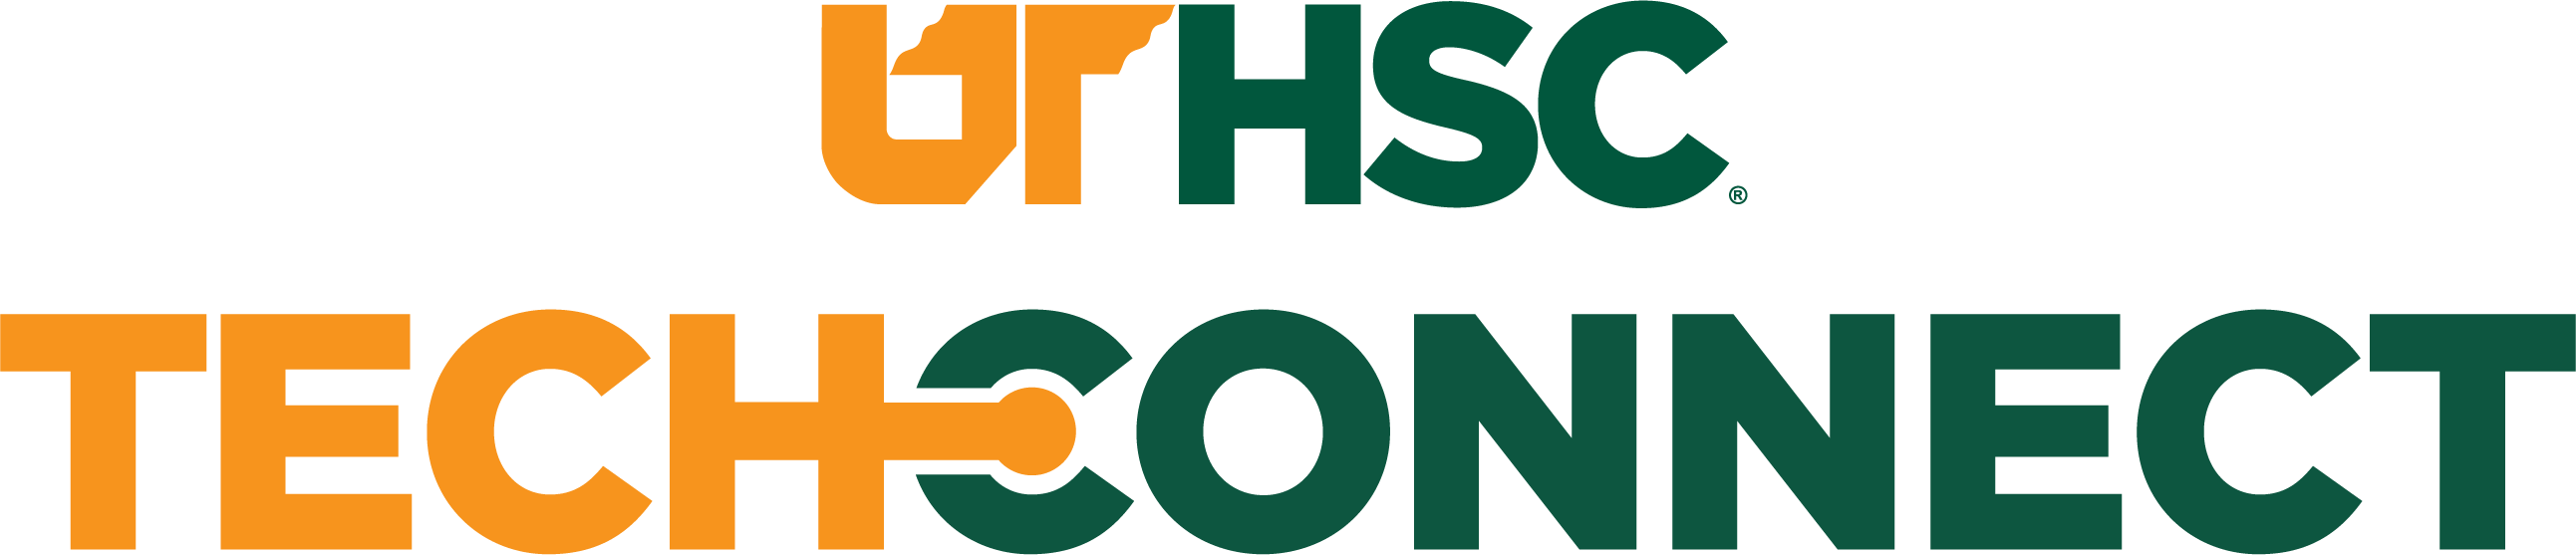 uthsc tech connect logo